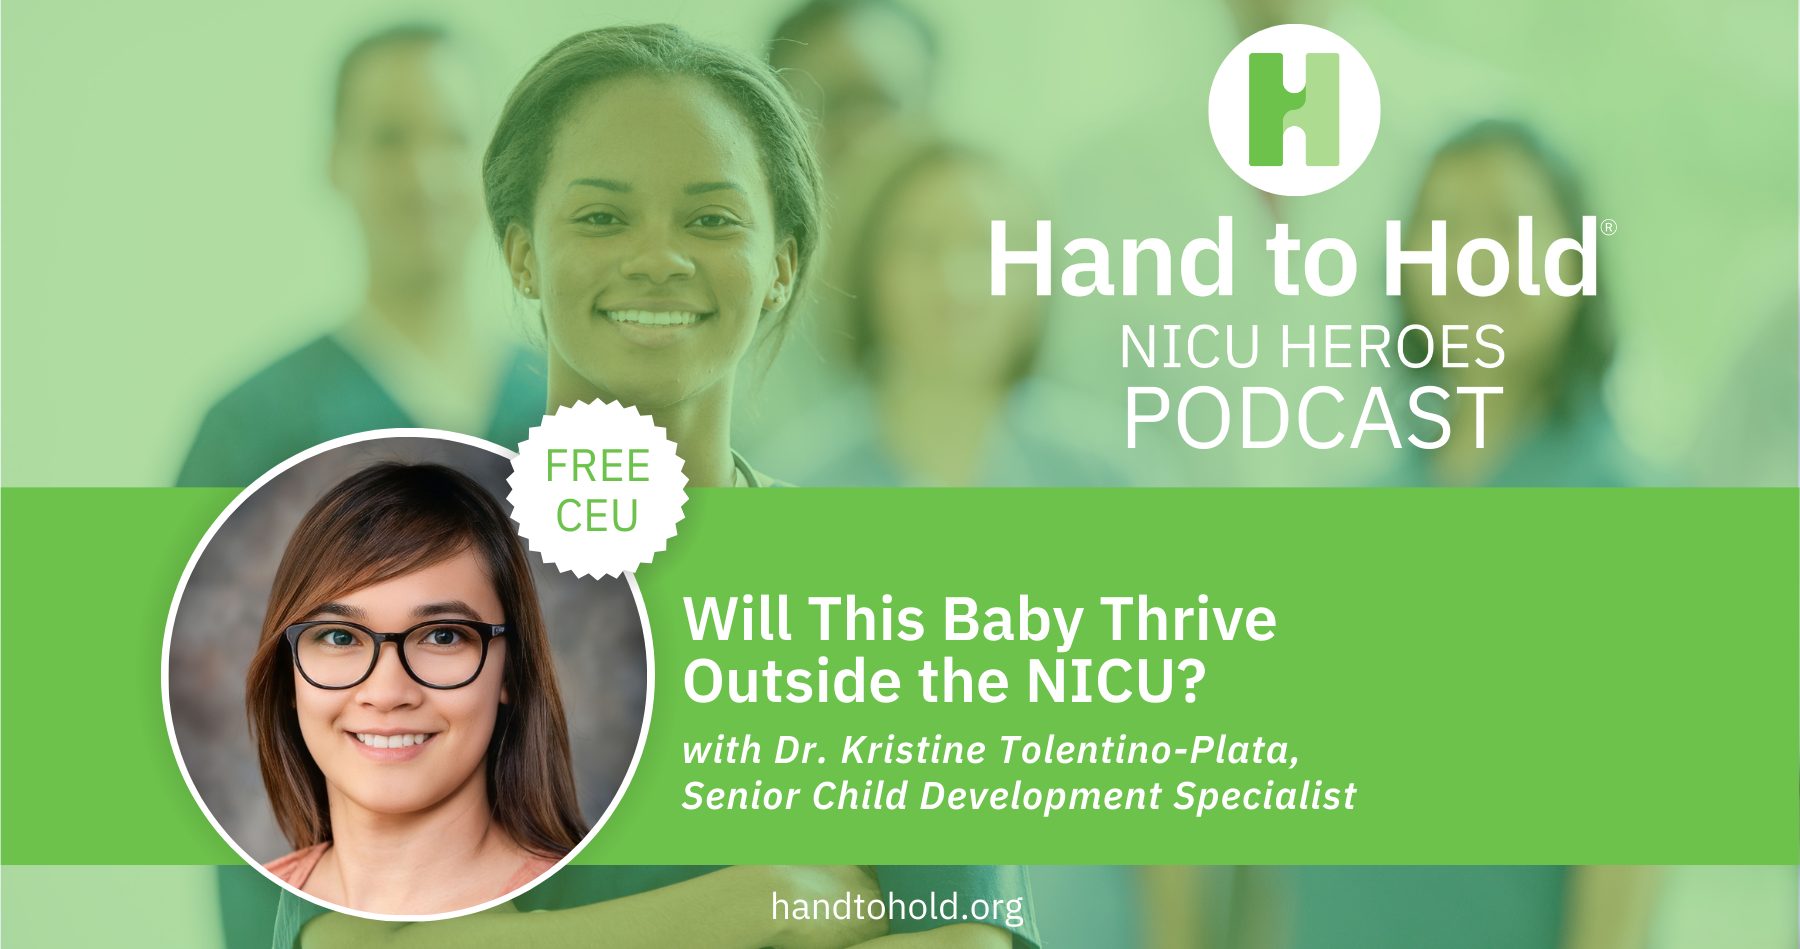 nicu heroes podcast, Dr. Kristine Tolentino-Plata, hand to hold